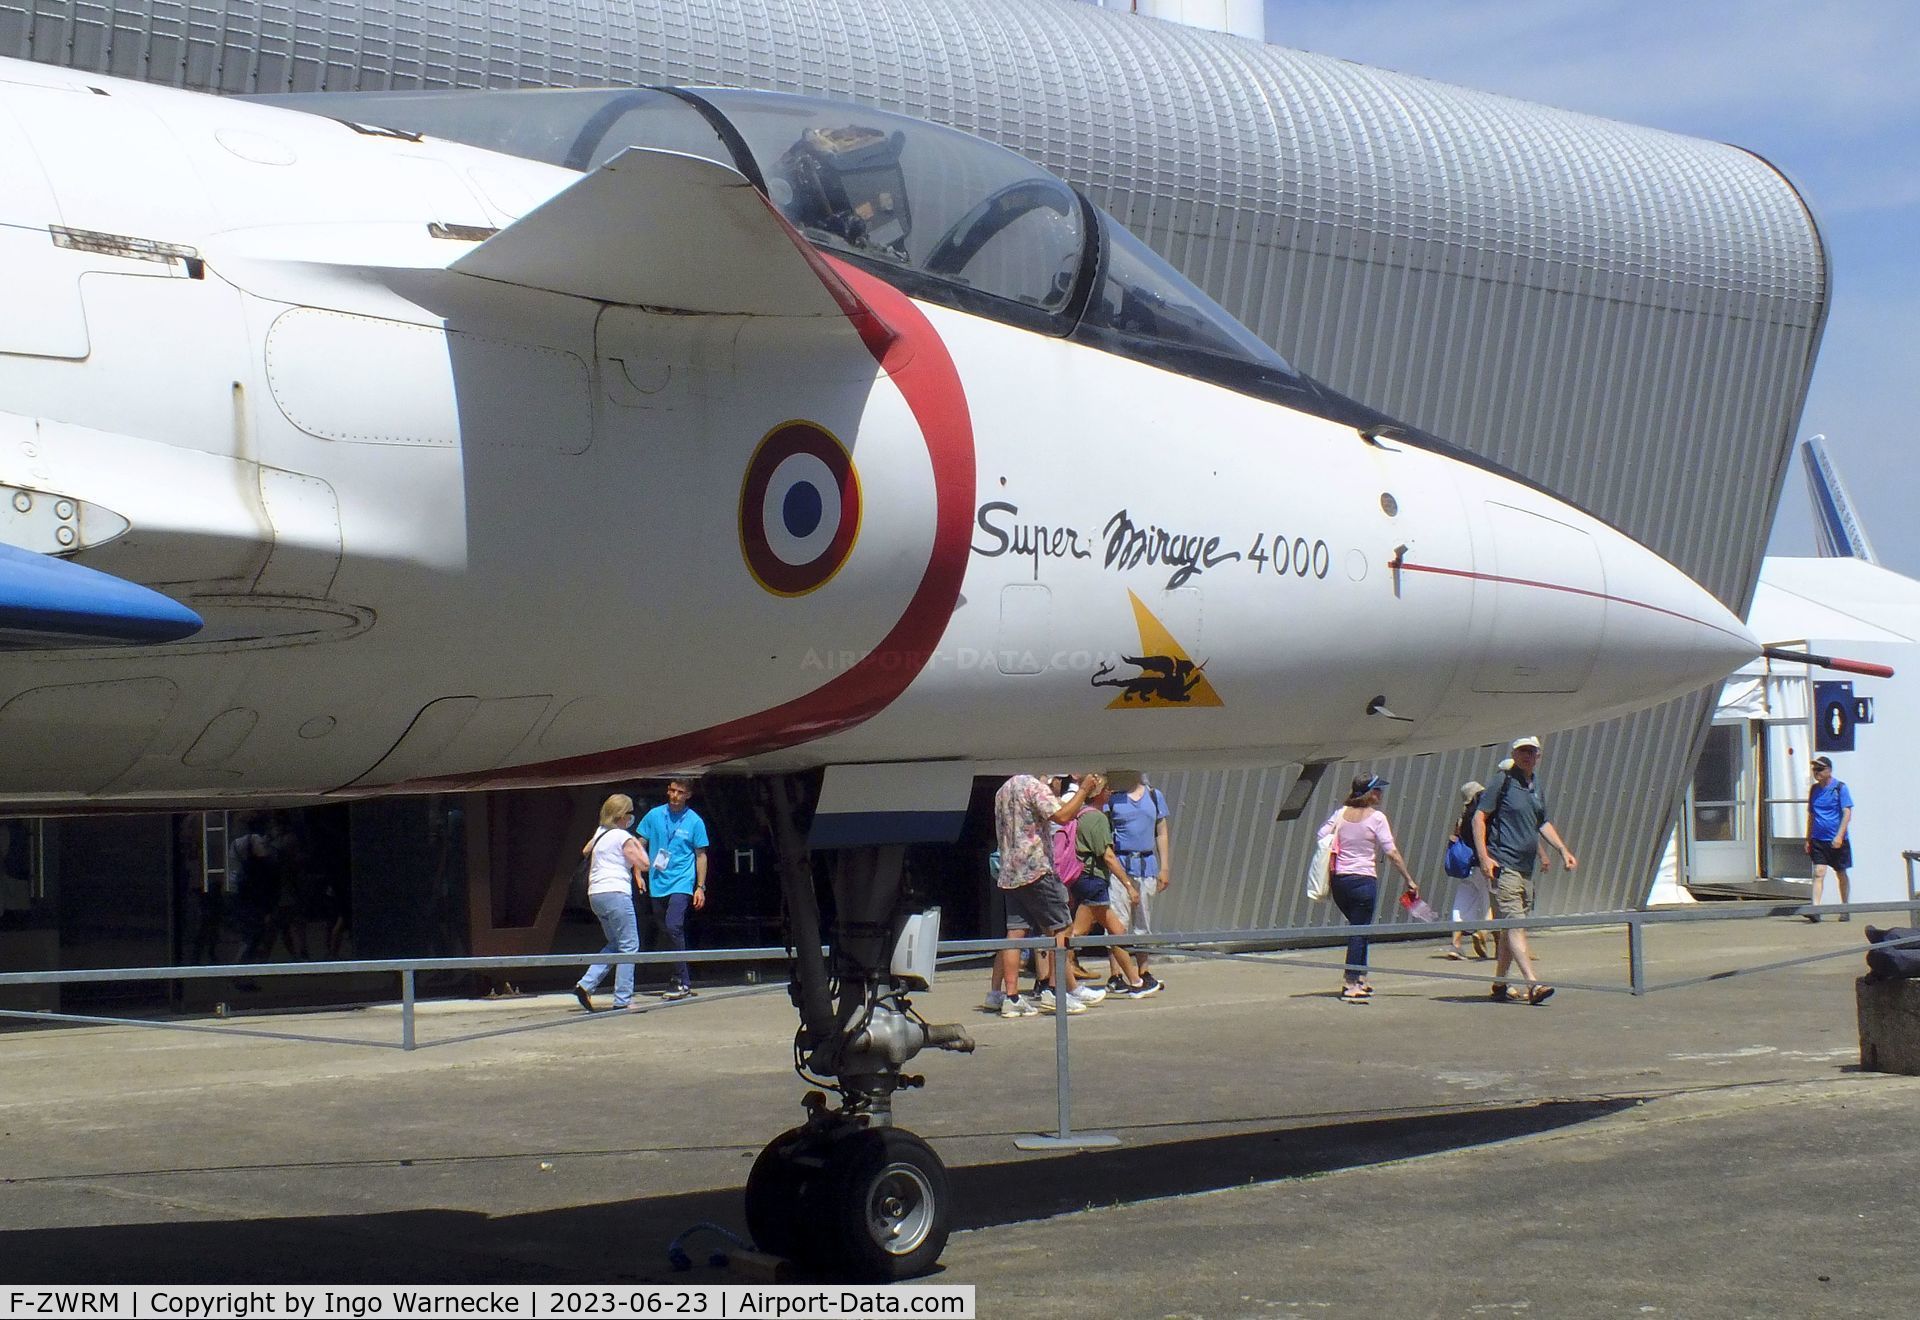 F-ZWRM, Dassault Super Mirage 4000 C/N 01, Dassault Super Mirage 4000 prototype at the Musee de l'Air, Paris/Le Bourget